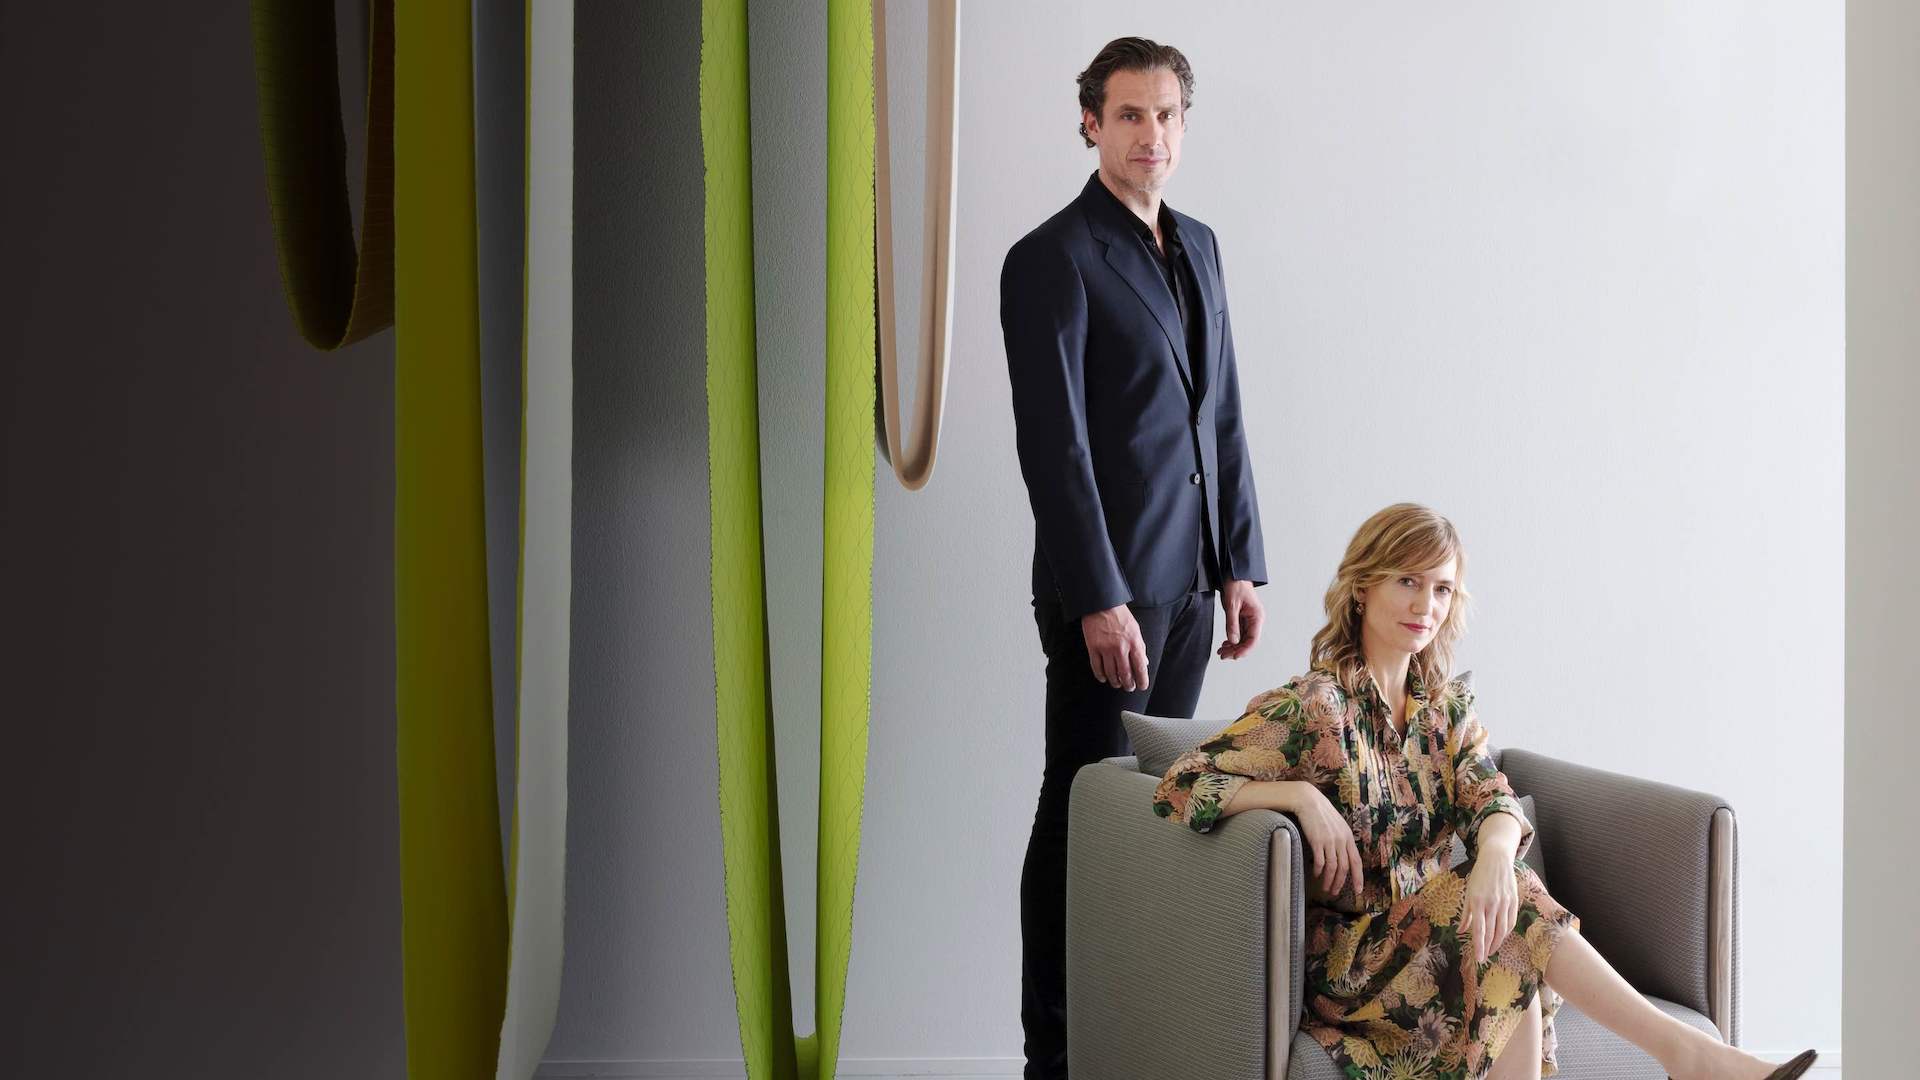 Product designers Stefan Scholten and Carole Baijings.